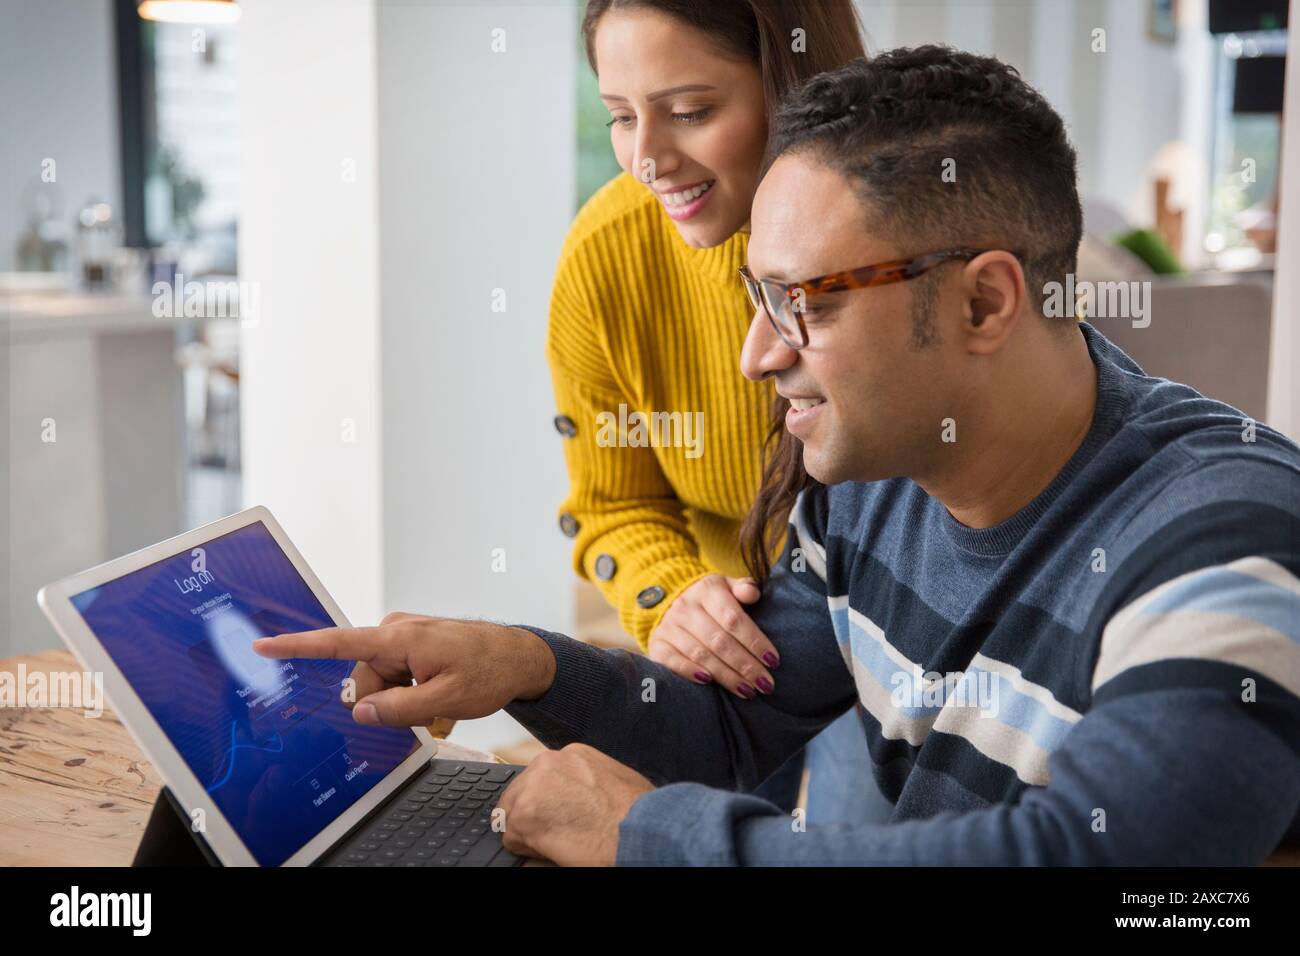 Couple using digital tablet, logging on with fingerprint Stock Photo